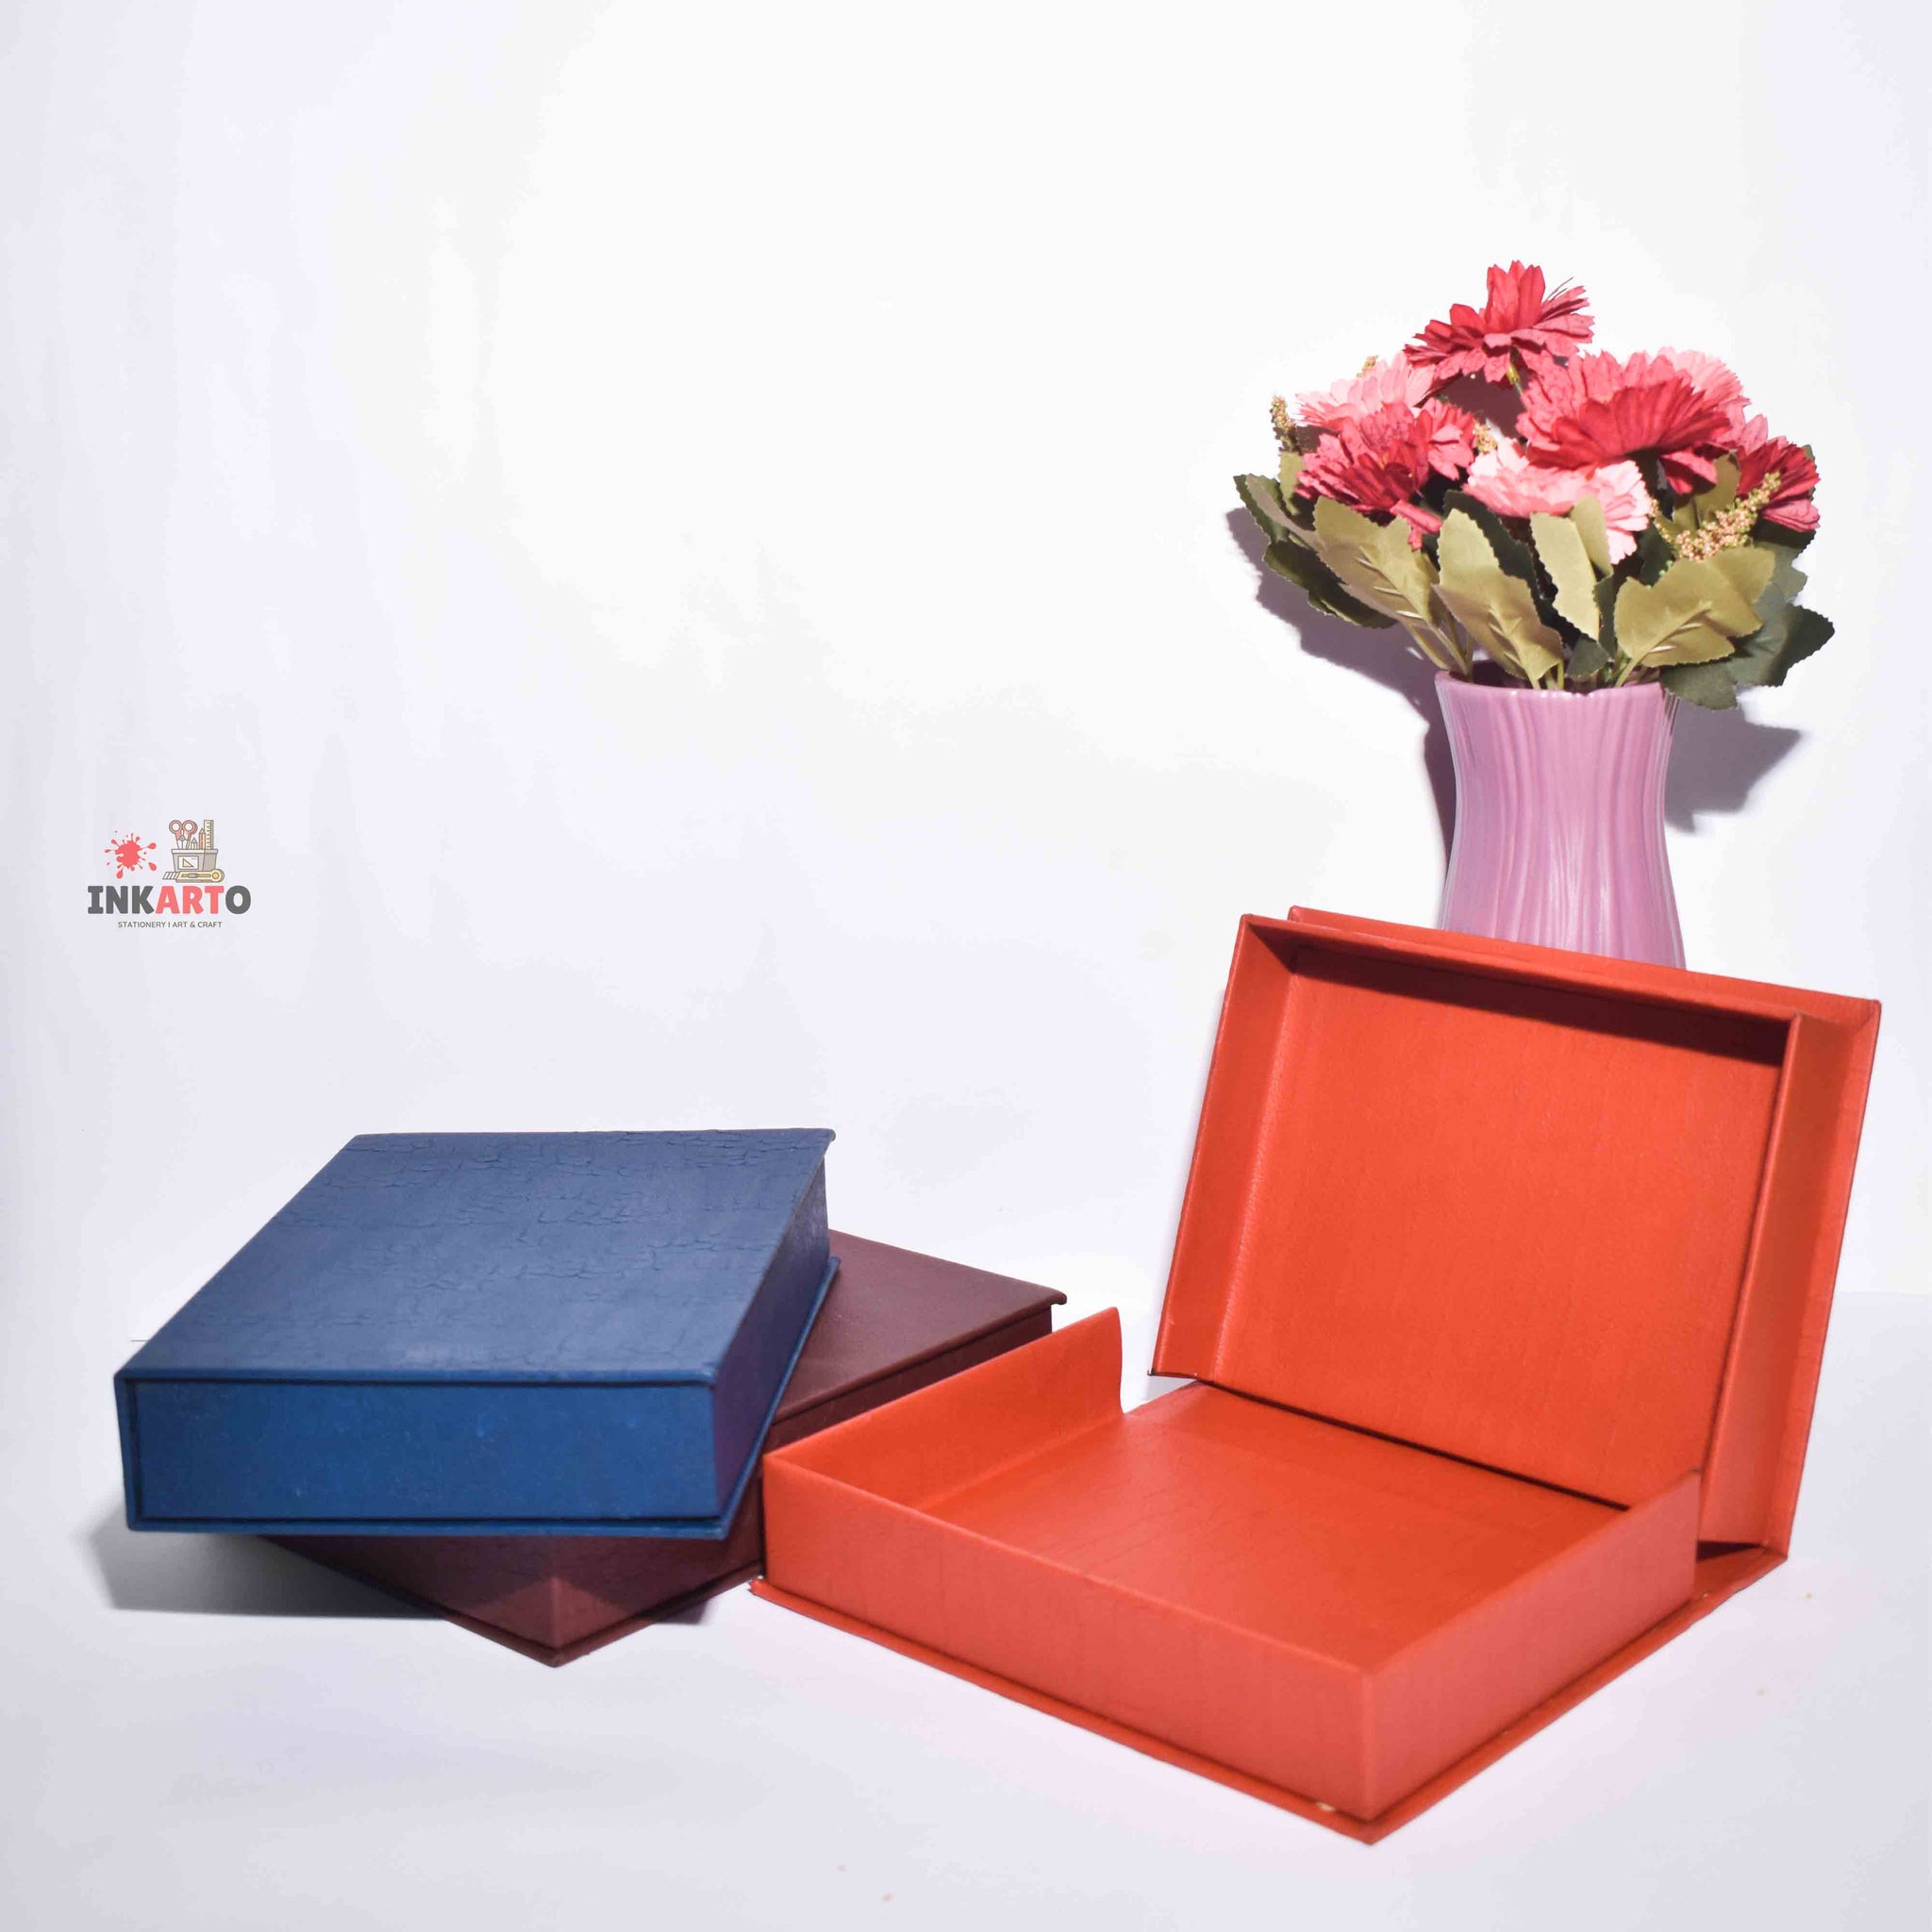 Inkarto Hamper Supplies Decorative box for Gifting, storage and Hamper box- (Pack of 1)